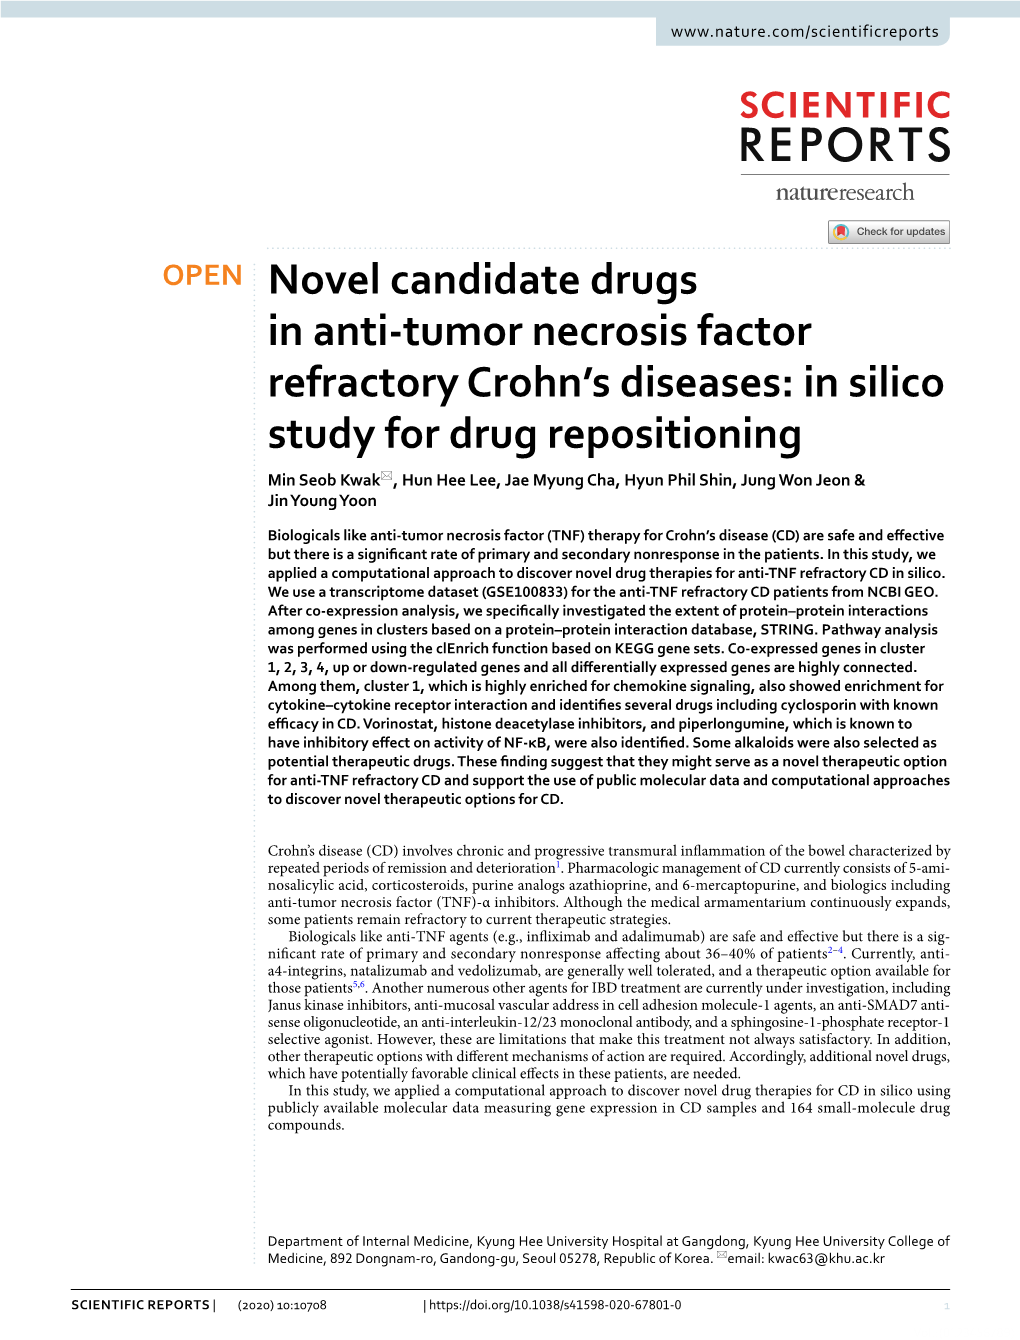 Novel Candidate Drugs in Anti-Tumor Necrosis Factor Refractory Crohn's